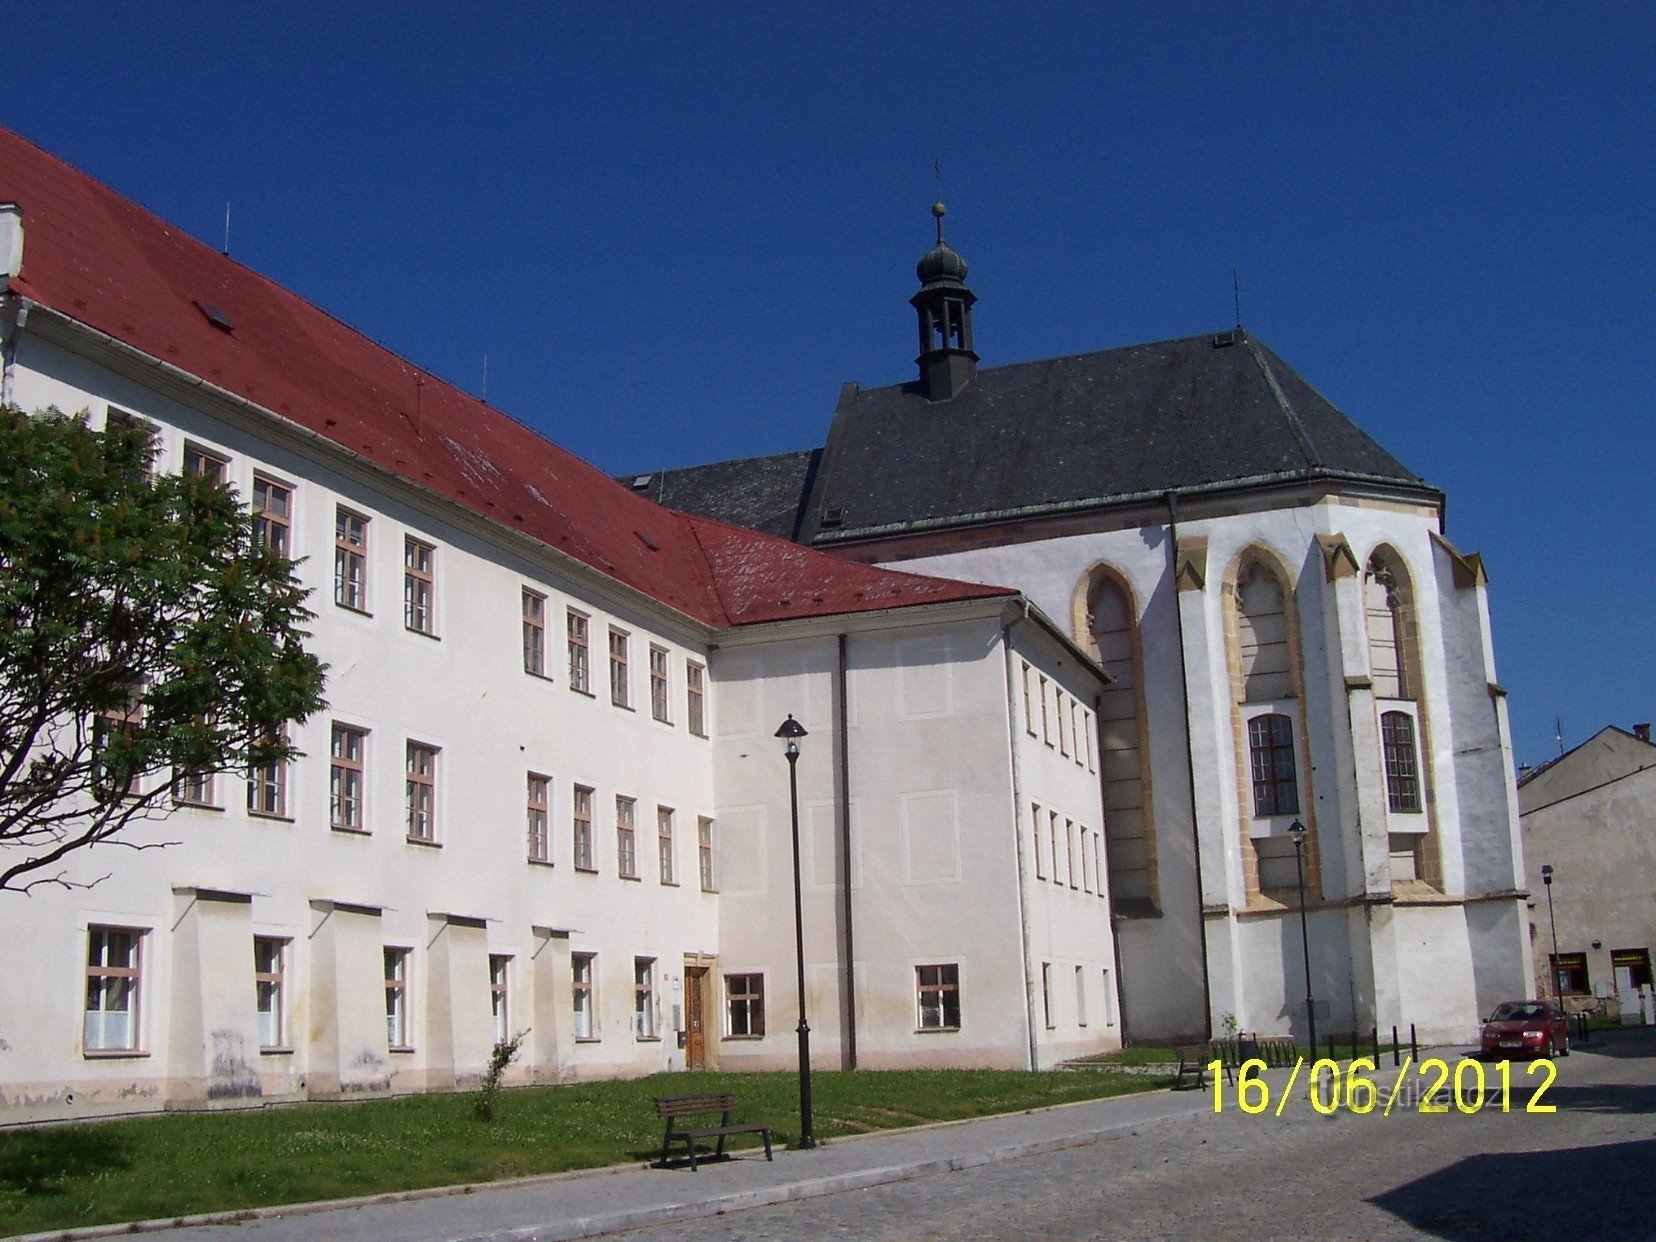 foto da igreja com sacristia da rua Olomoucká